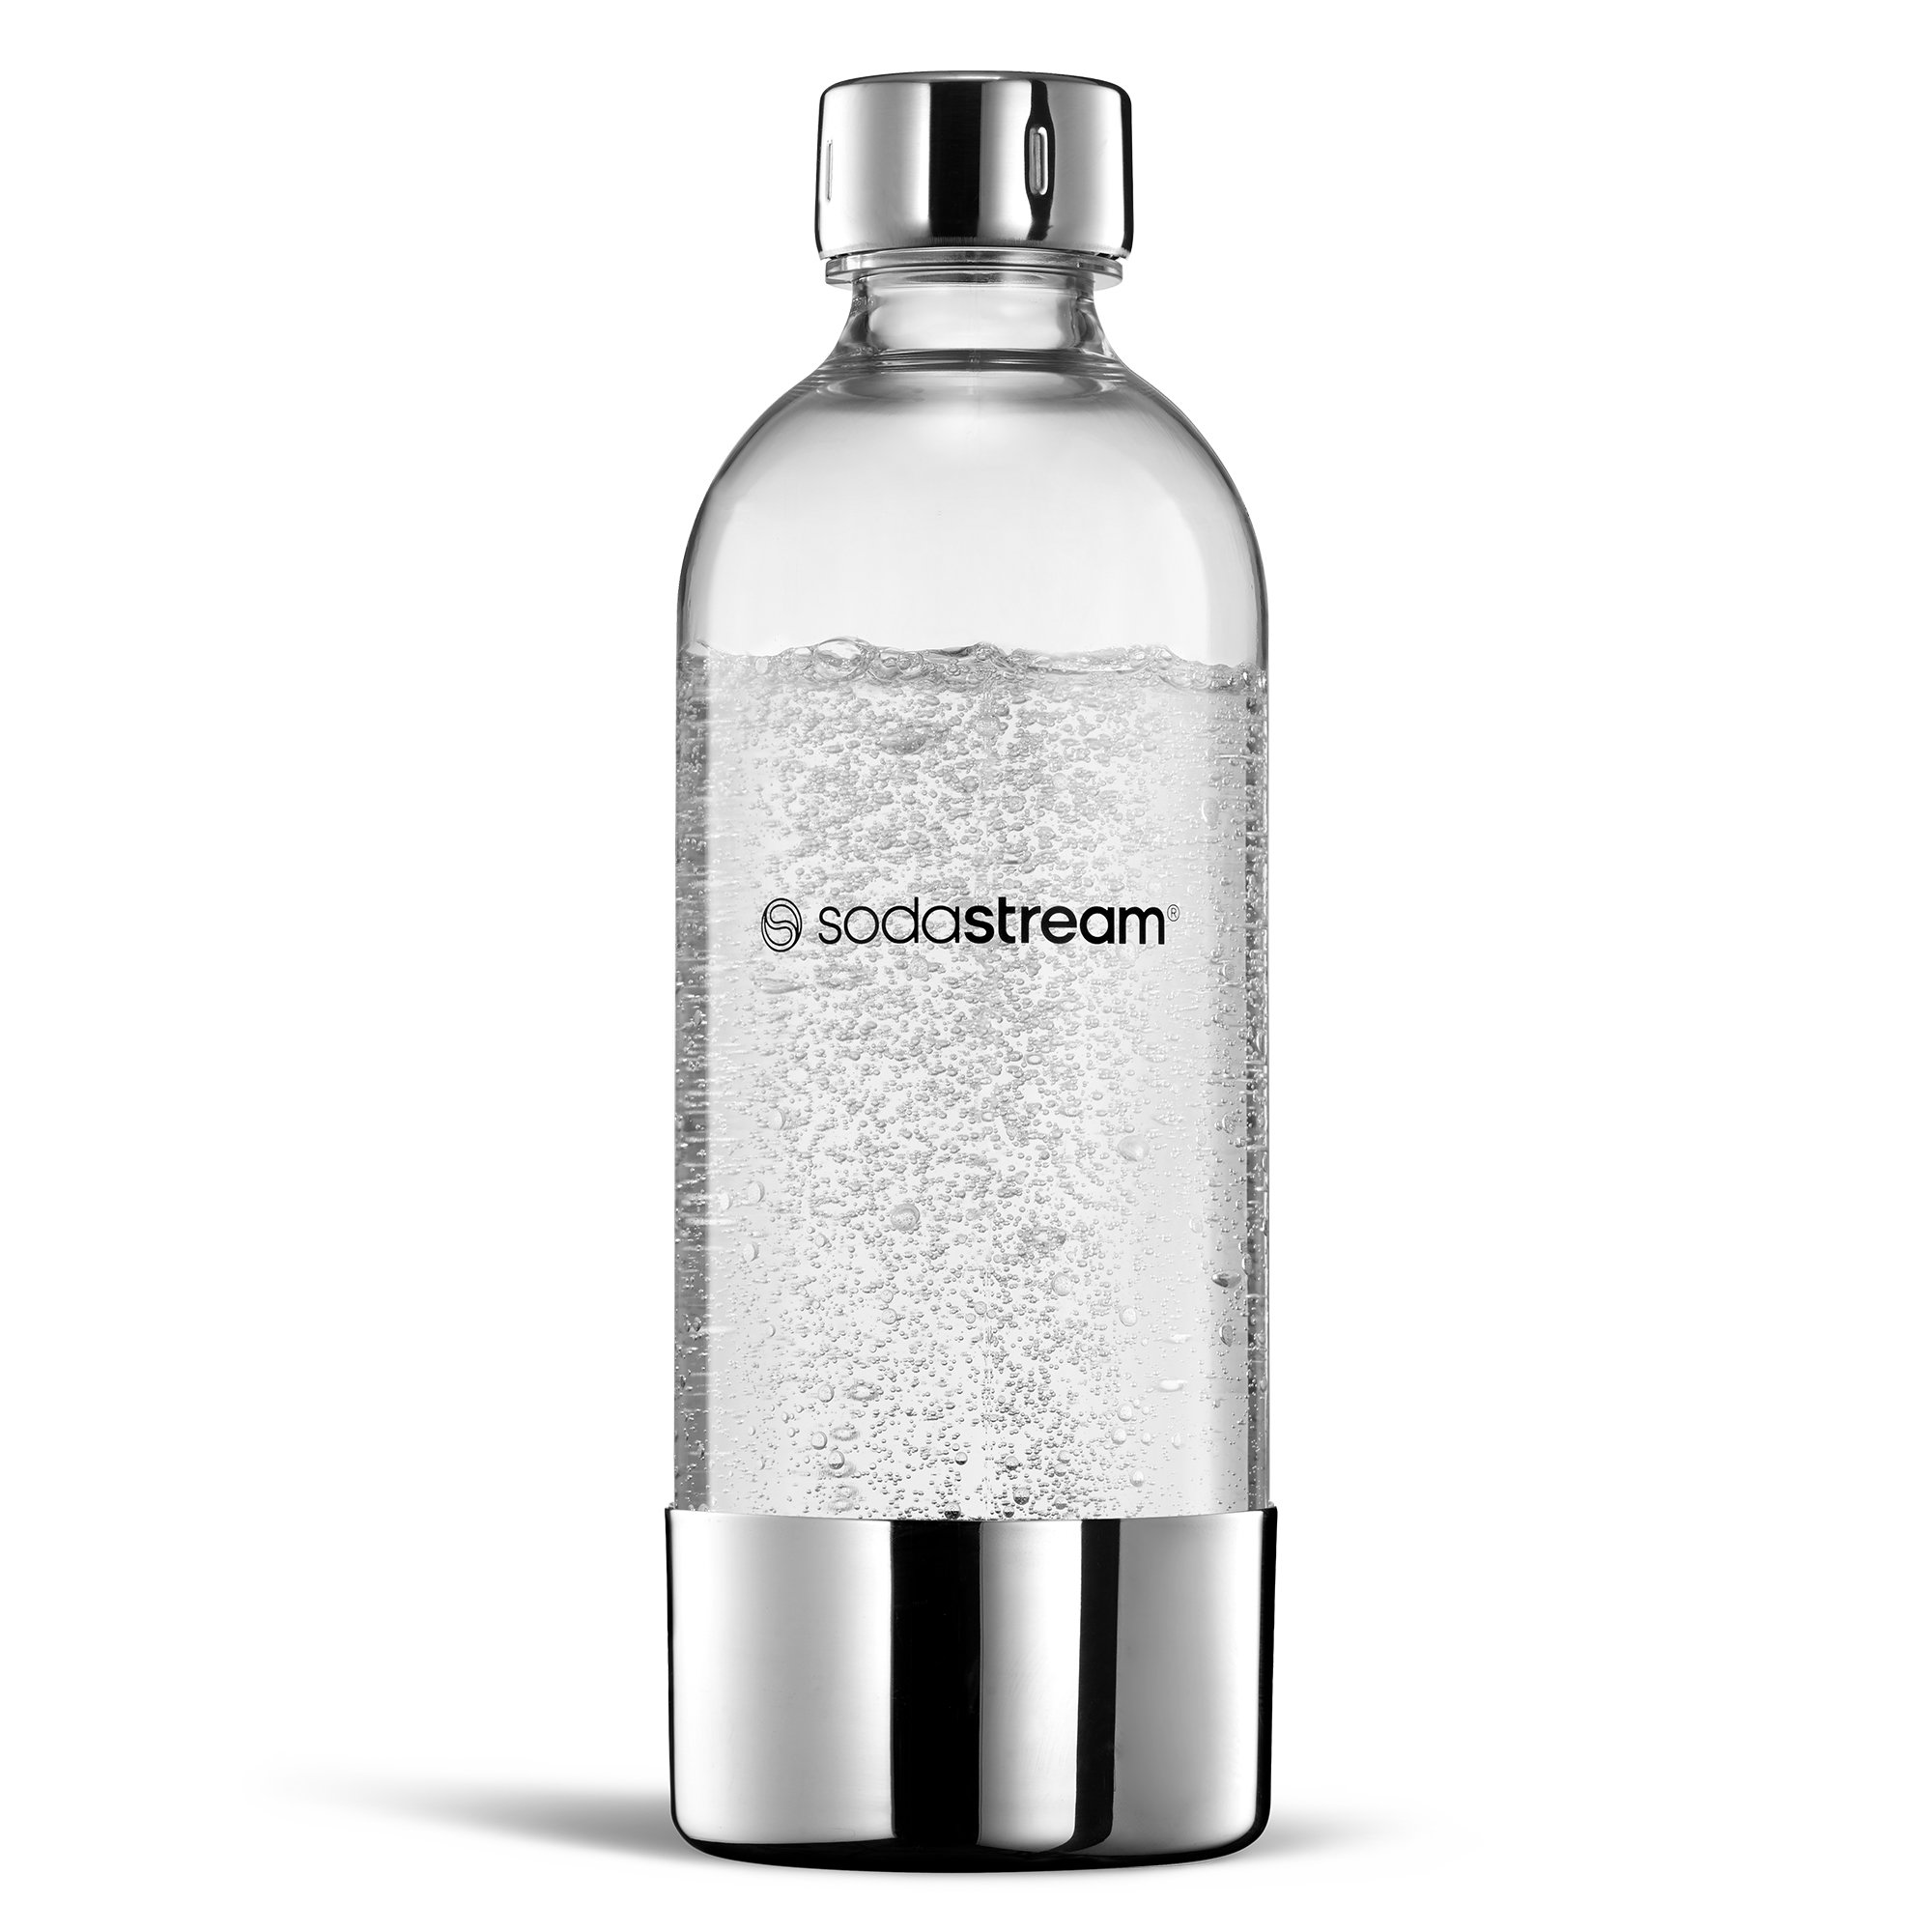 SodaStream Ensõ flaske, 1 liter Flaske